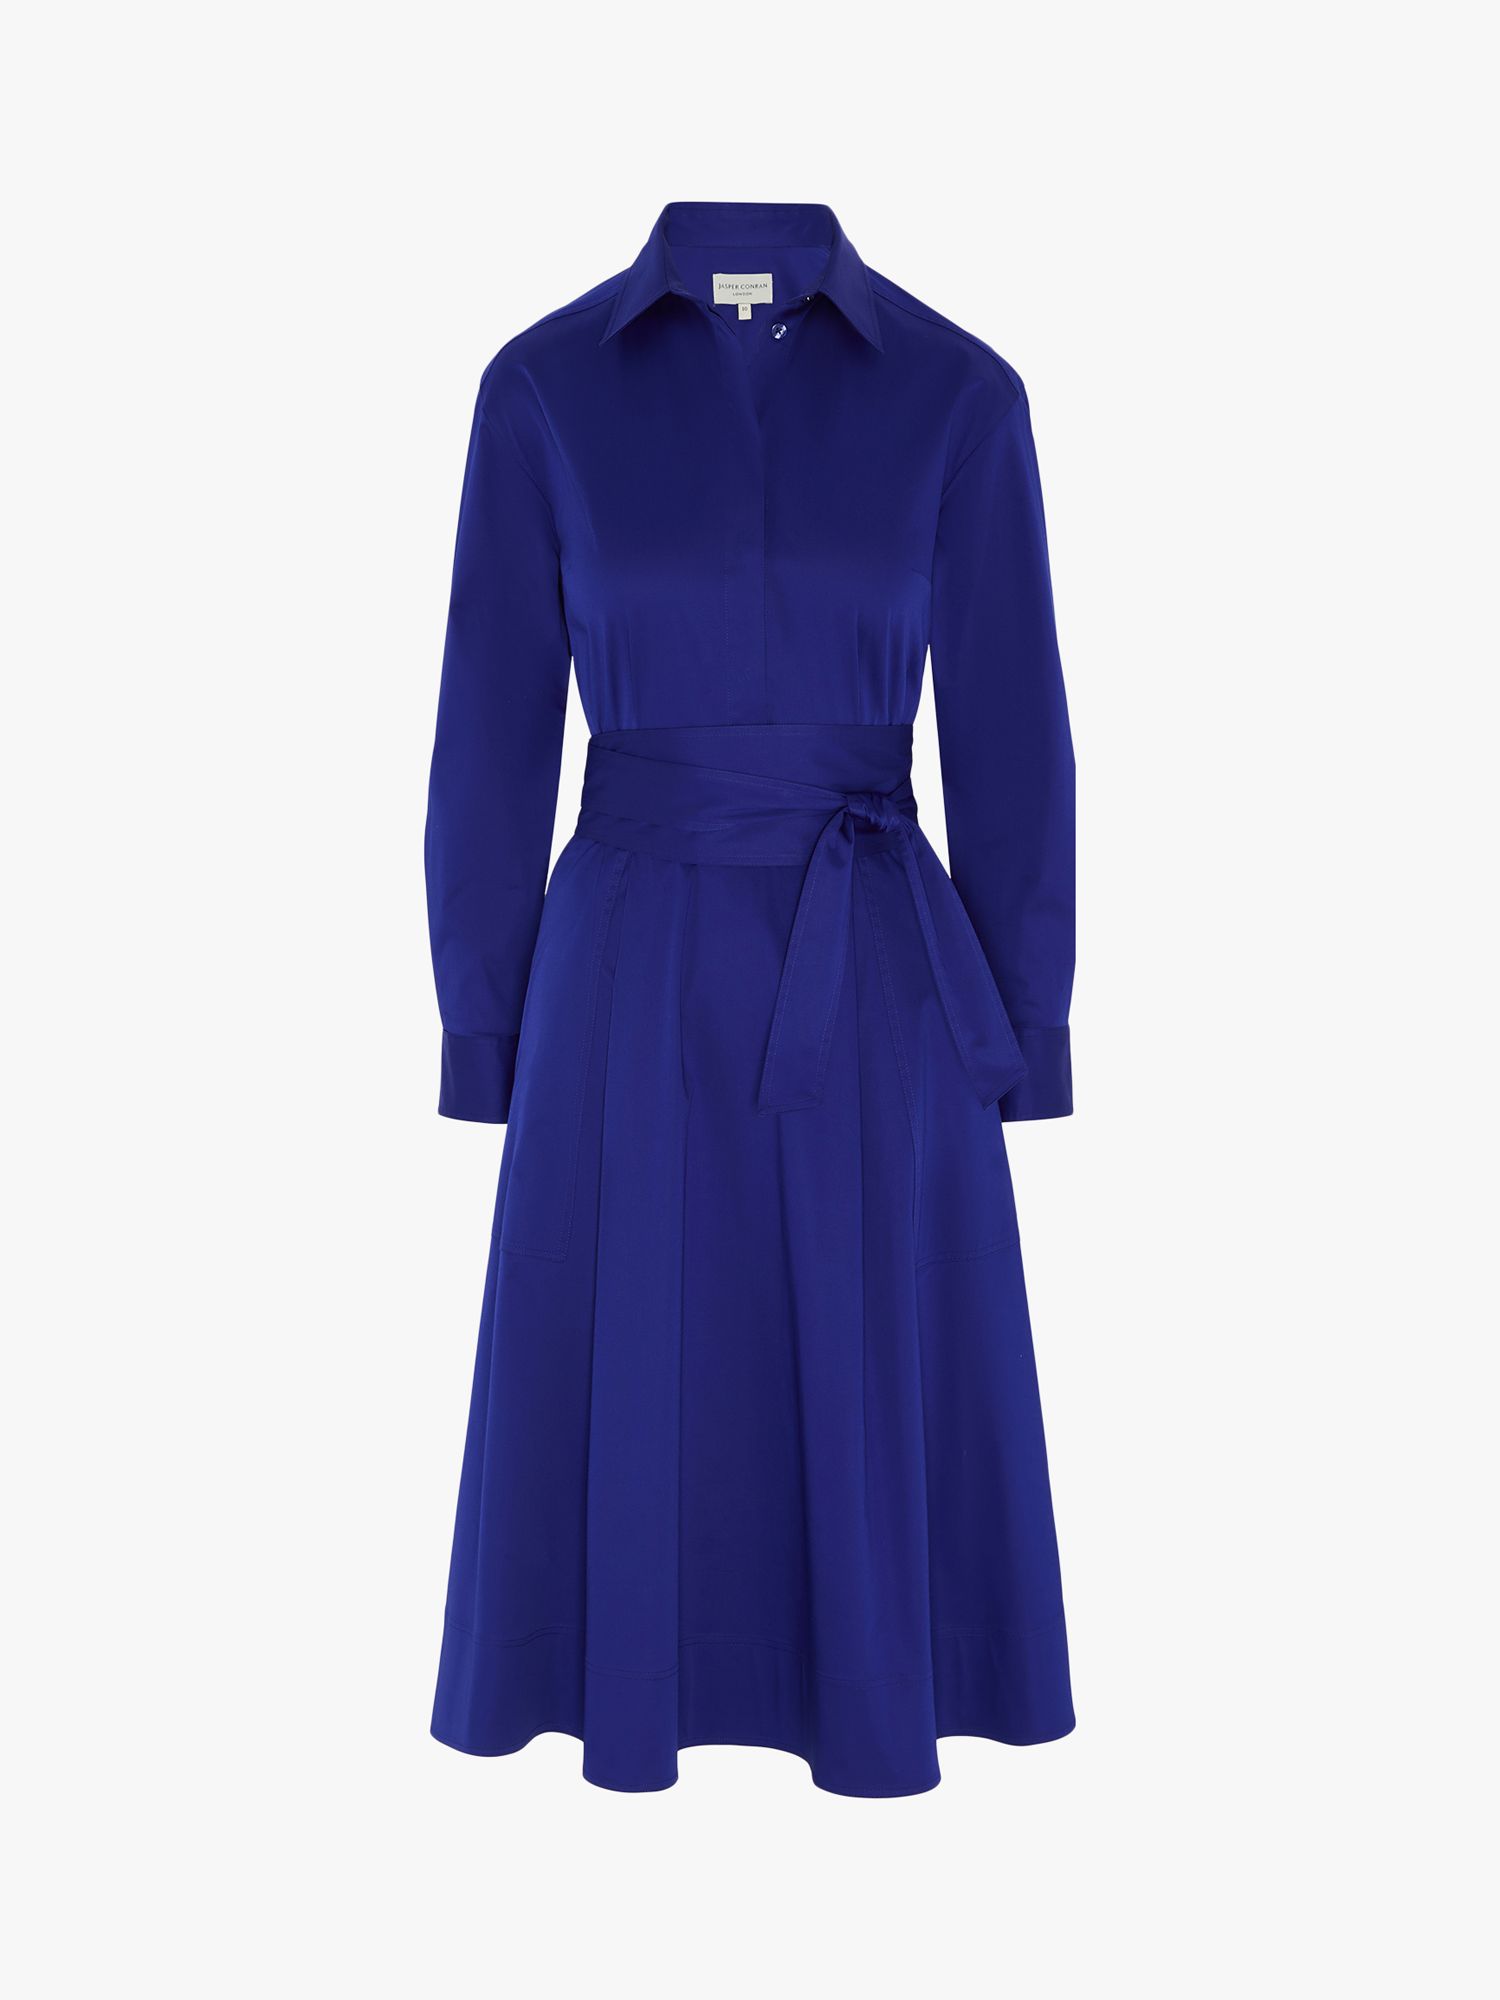 Jasper Conran London Blythe Full Skirt Midi Shirt Dress, Royal Blue, 8